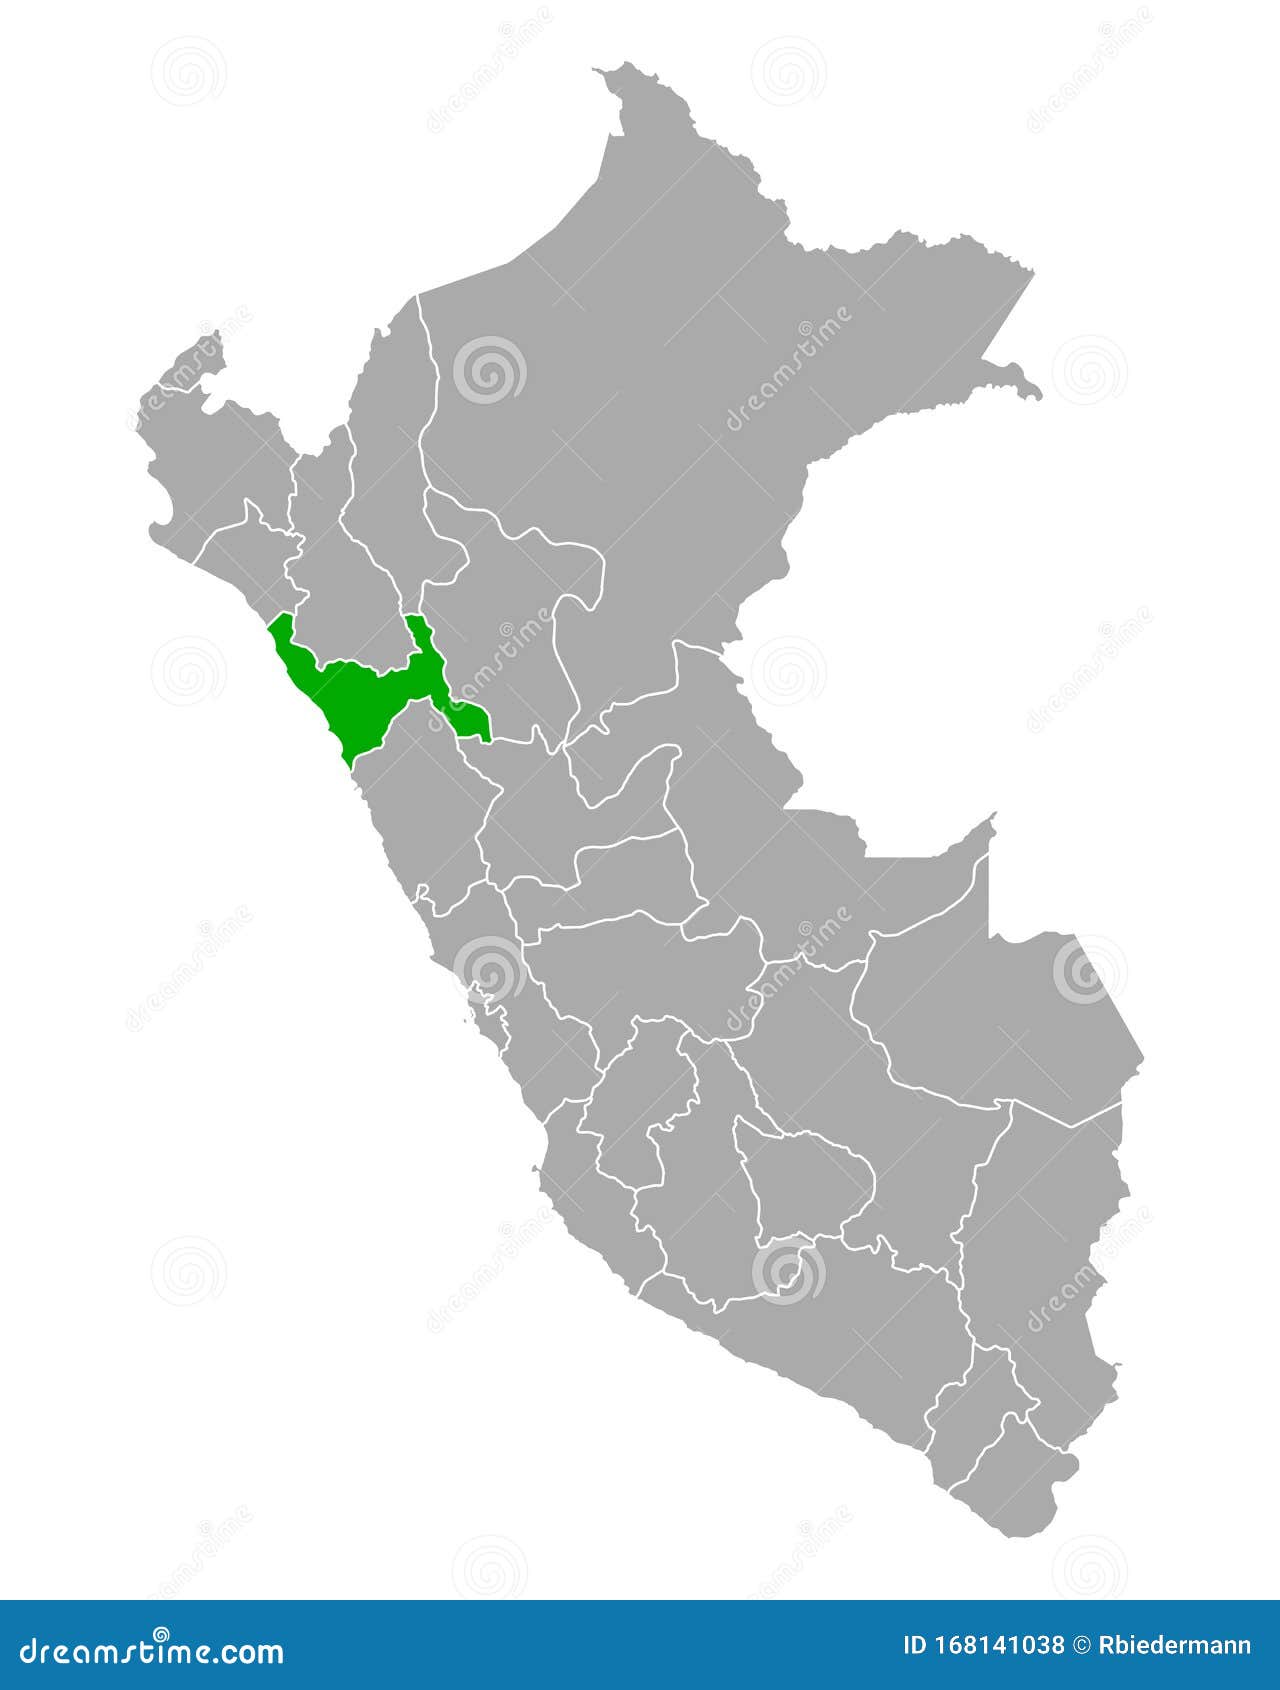 map of la libertad in peru